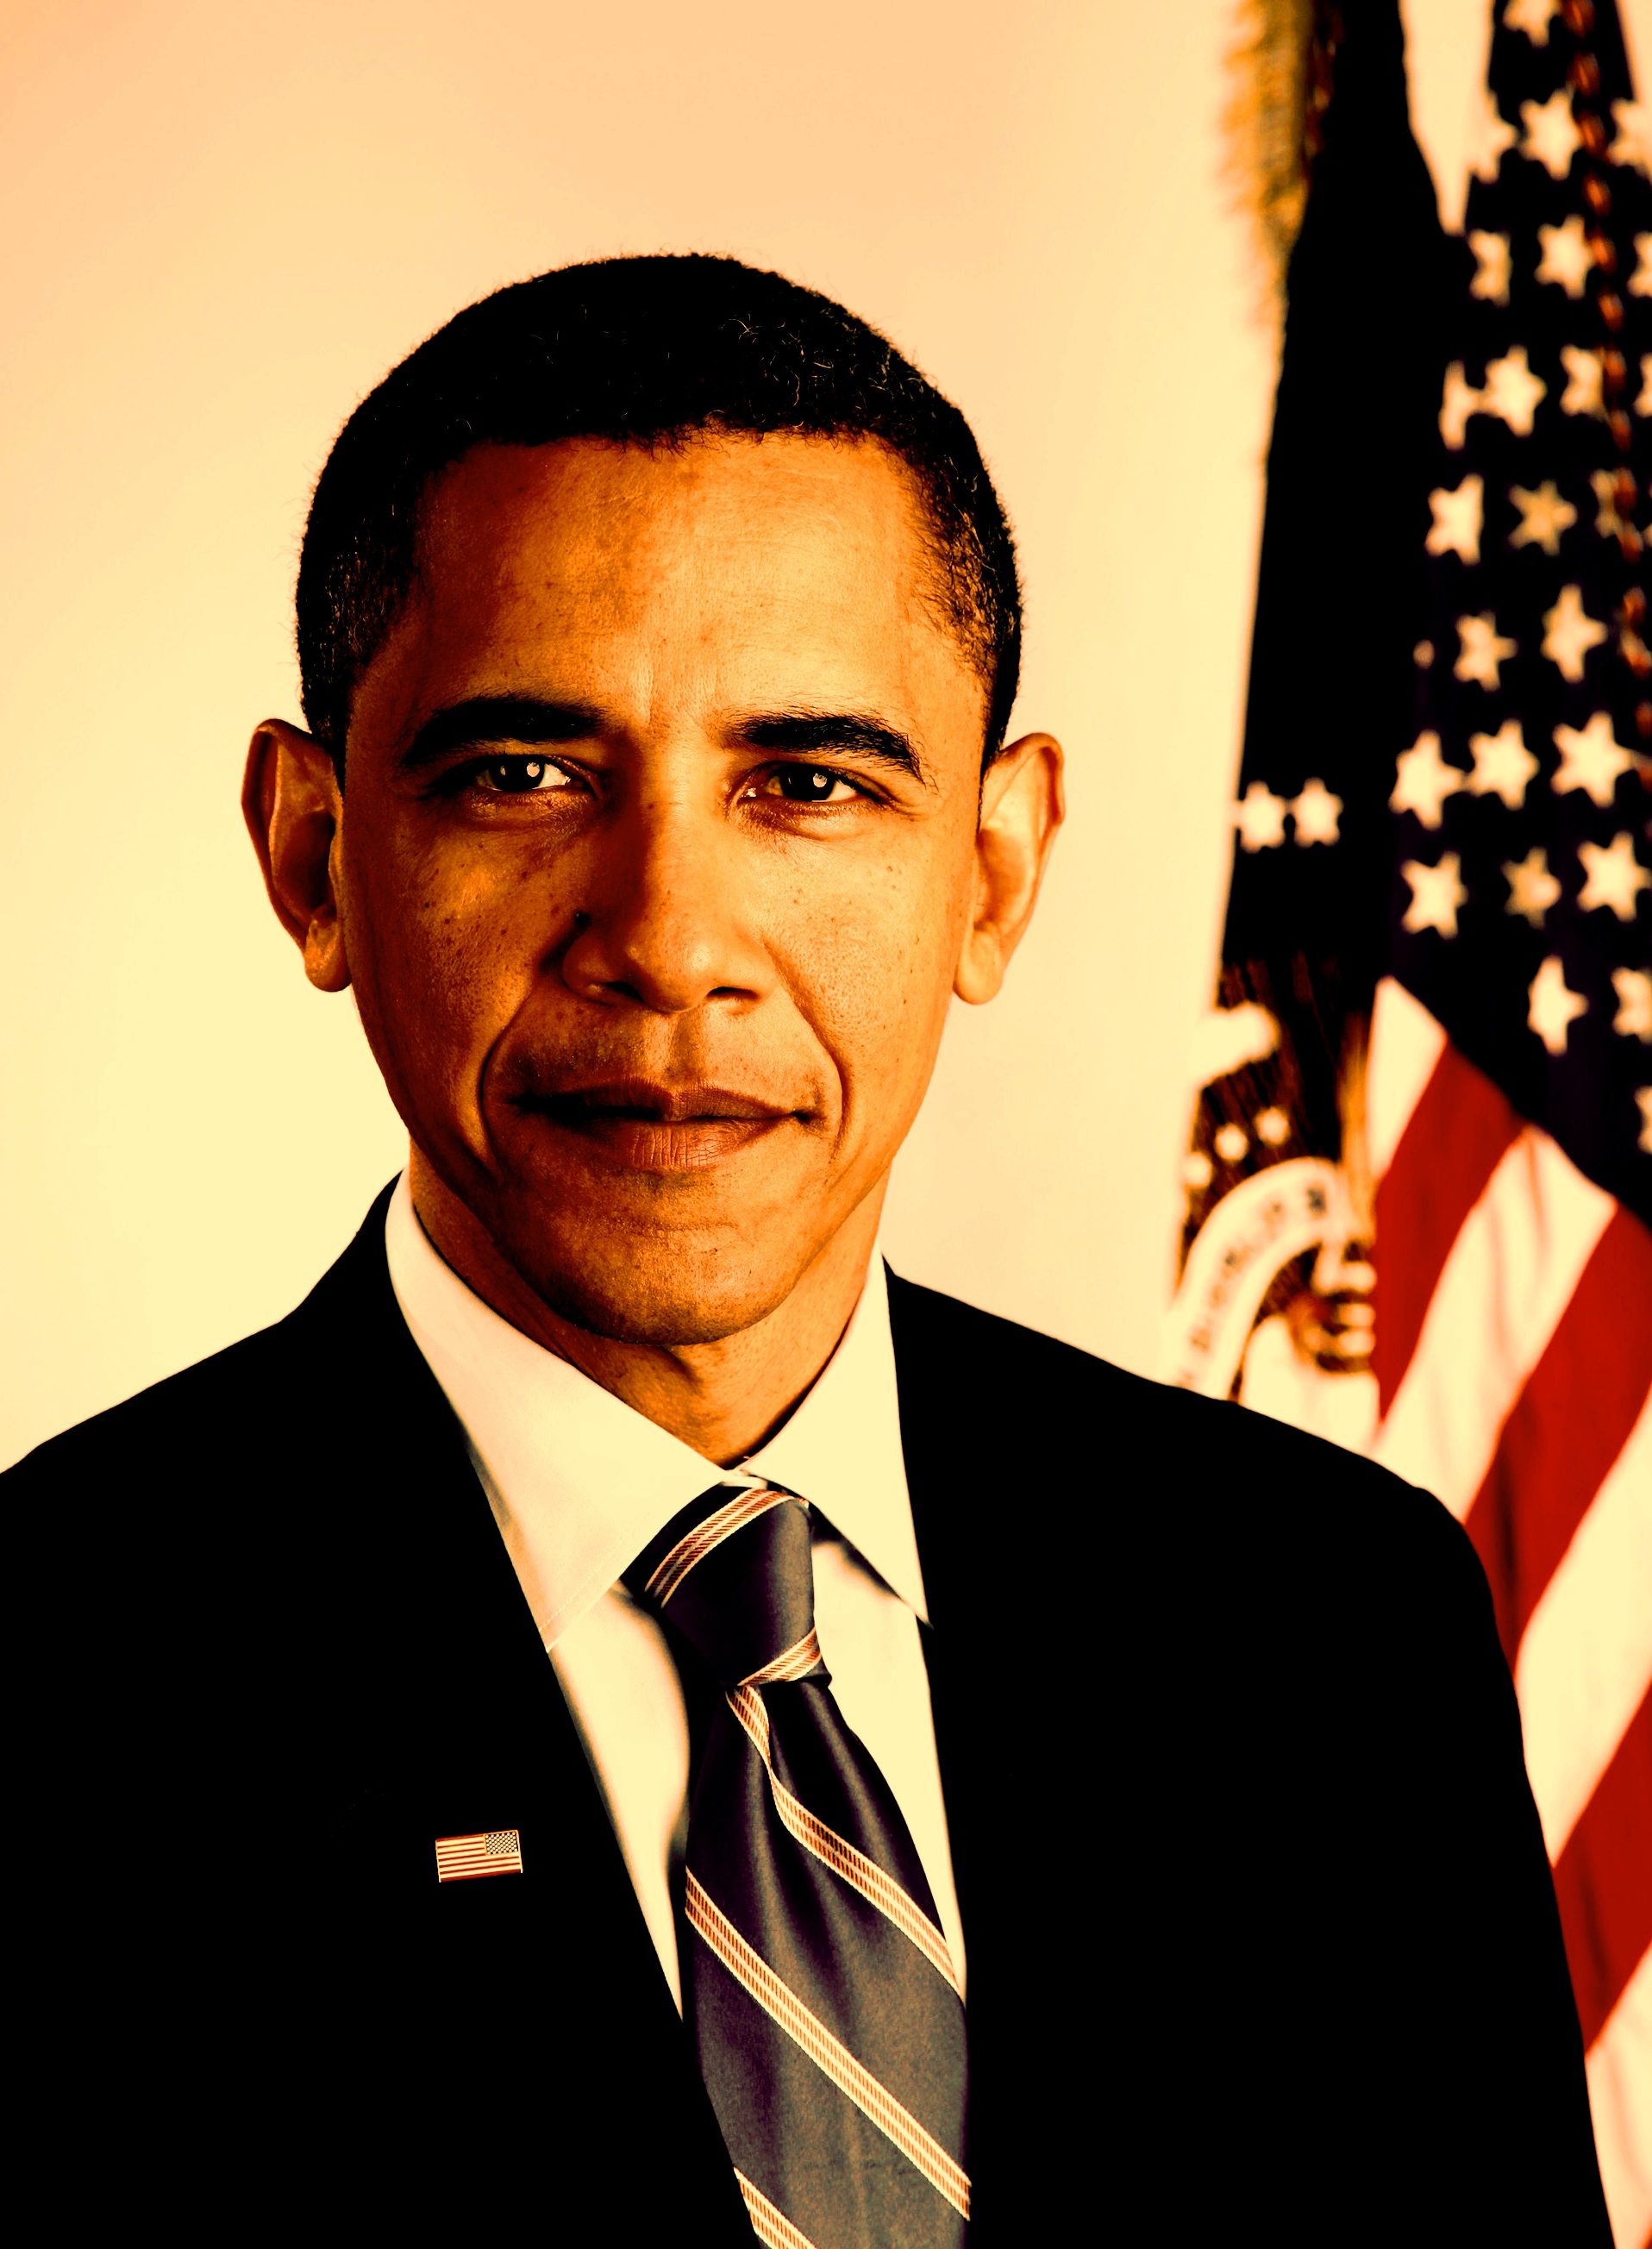 Official portrait of President-elect Barack Obama on Jan. 13, 2009. (Photo by Pete Souza)